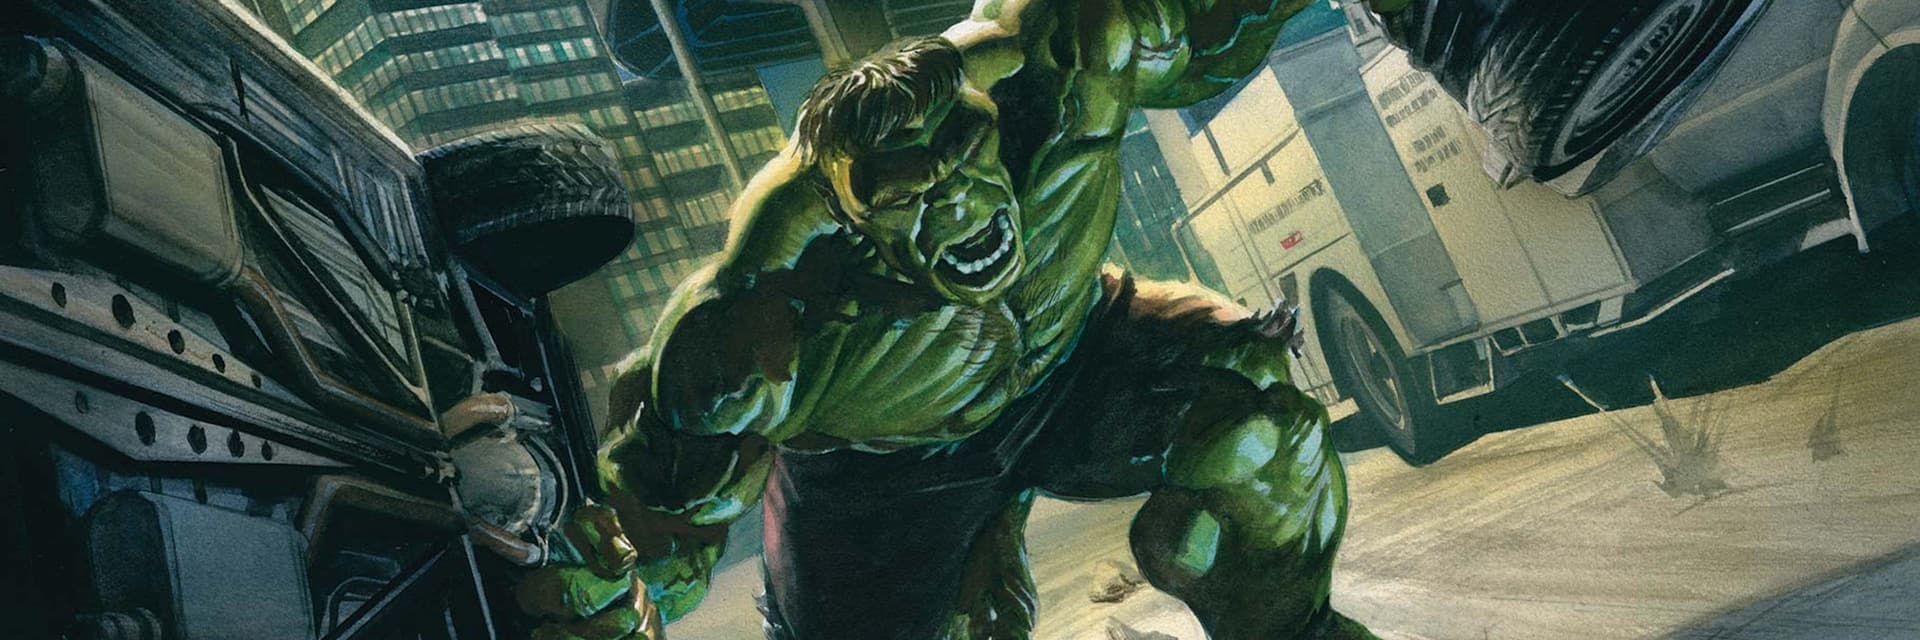 Hulk In Comics